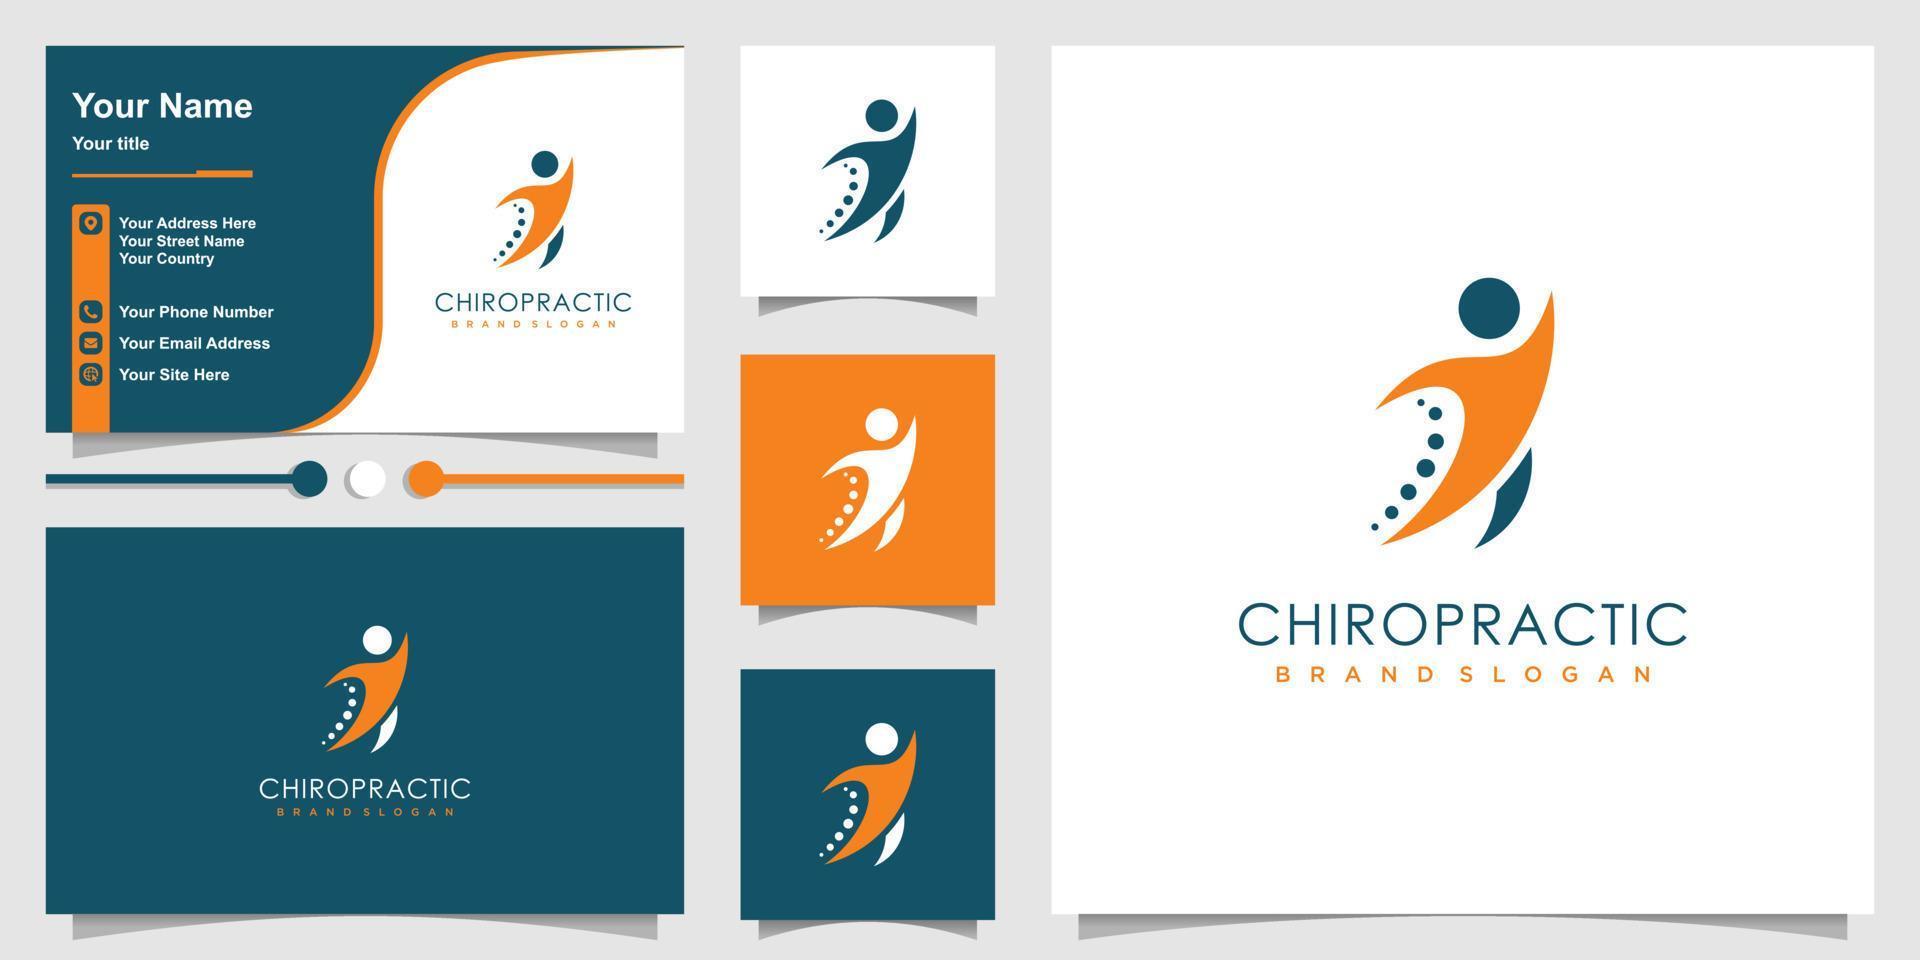 kiropraktik logotyp design vektor med kreativ unik begrepp